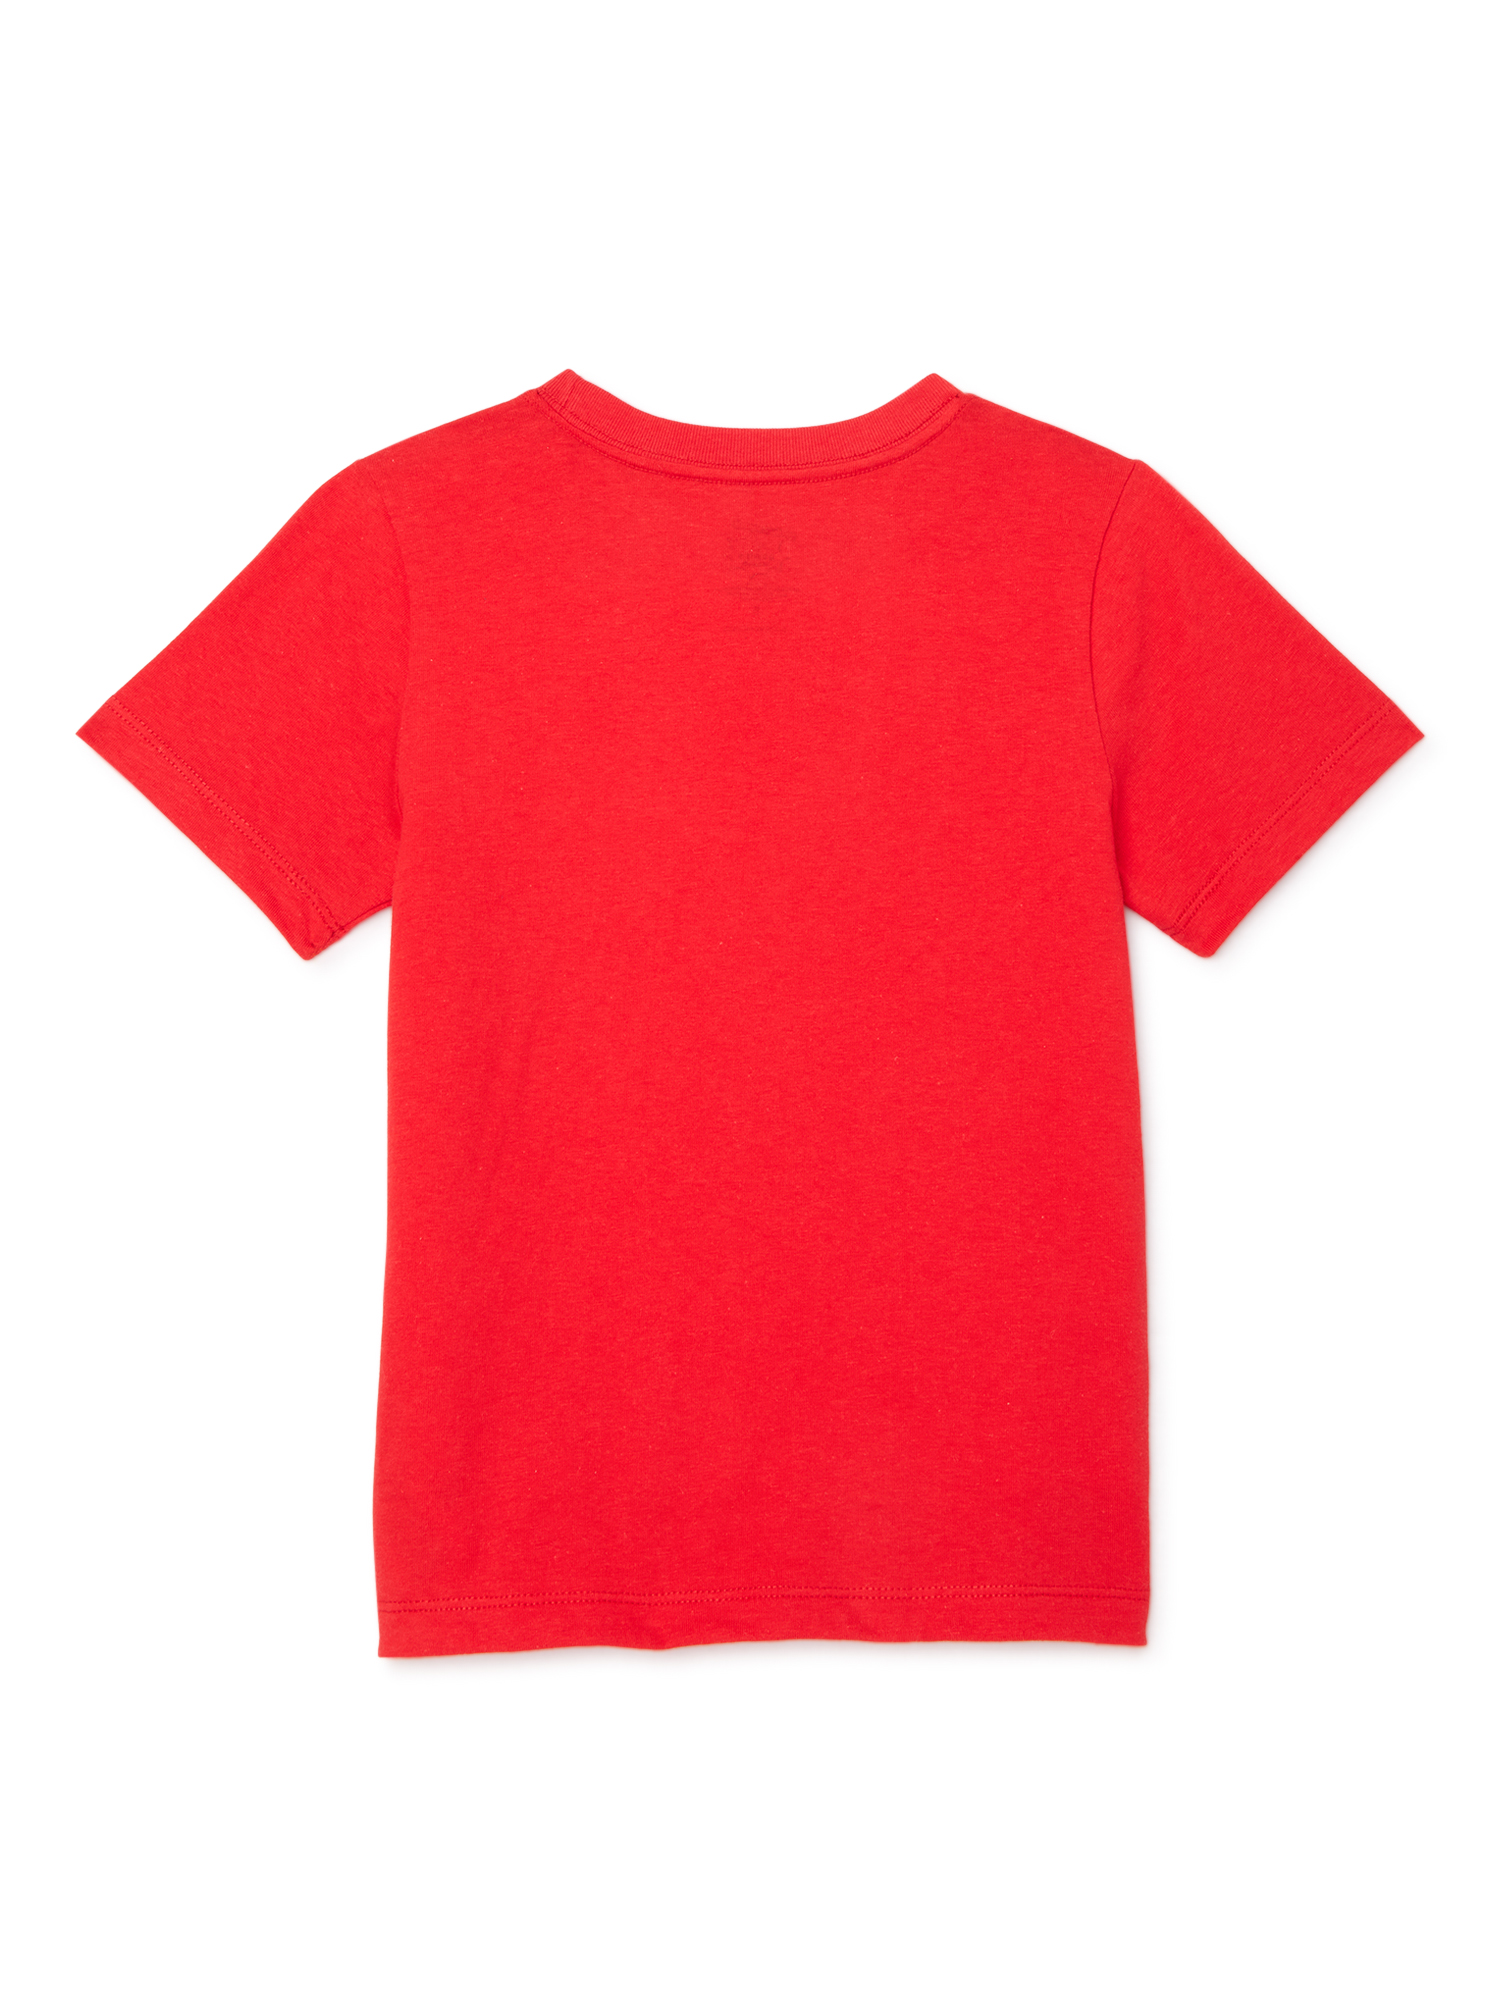 Ryan's World Boys Short Sleeve Graphic T-Shirts, 3 Pack Sizes 4-8 - image 2 of 7